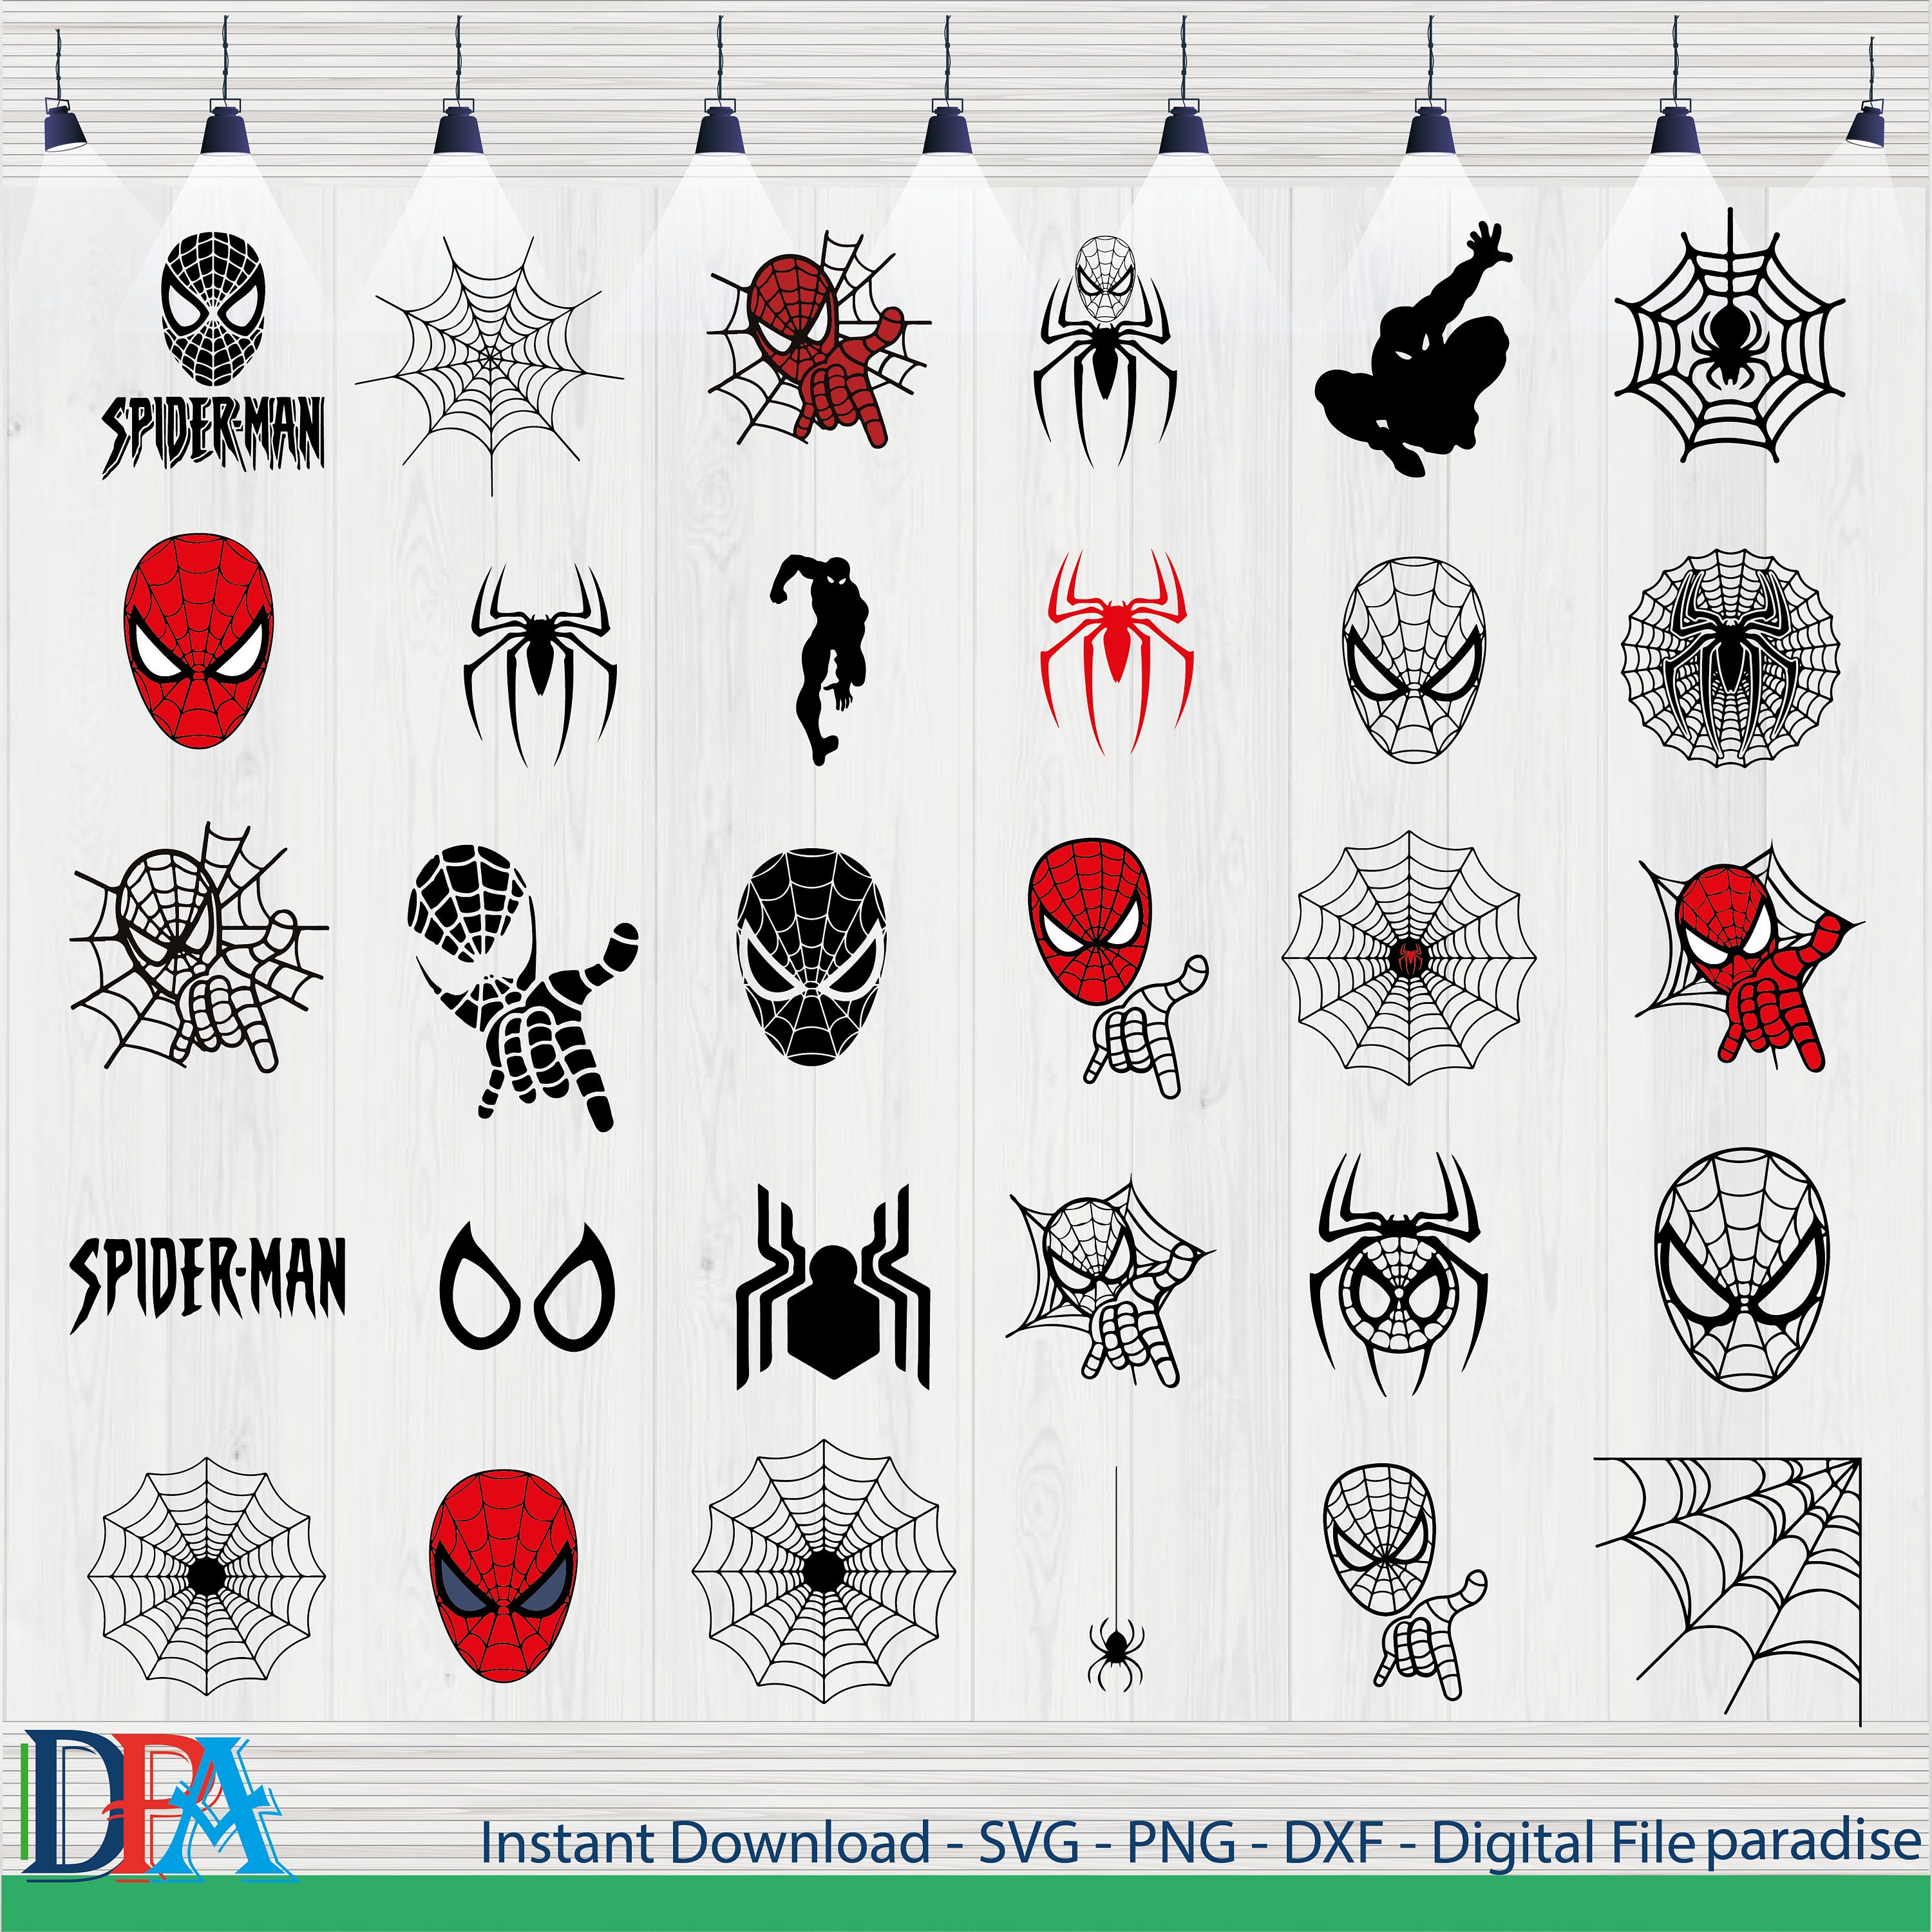 Spider Man Logo PNG Transparent & SVG Vector - Freebie Supply